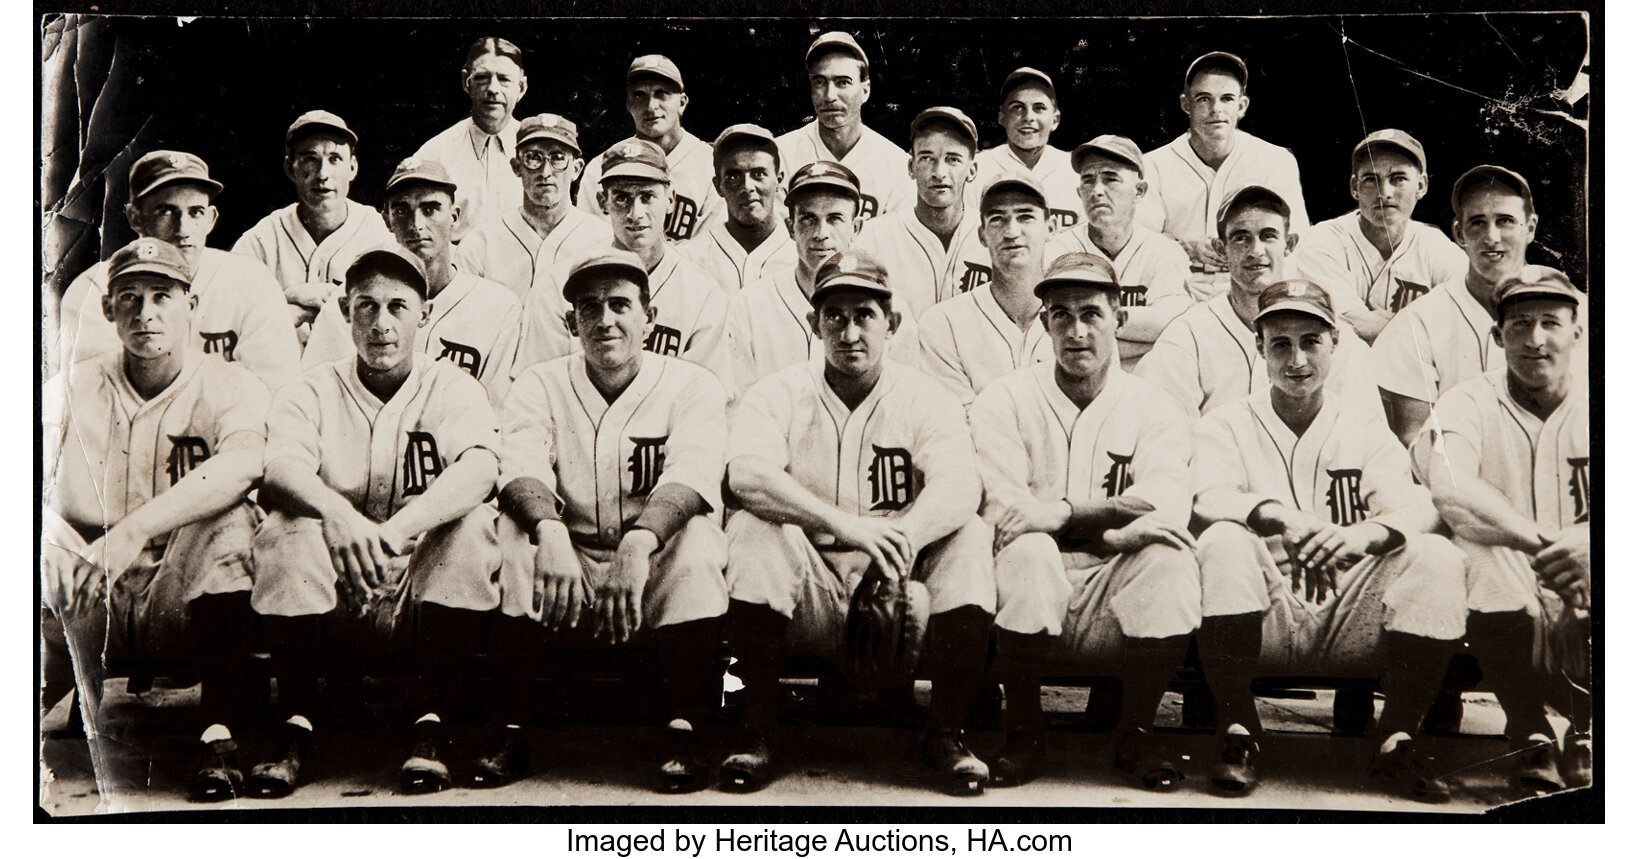 Lilmoxie — Detroit Tigers 75th Anniversary of 1935 World Series